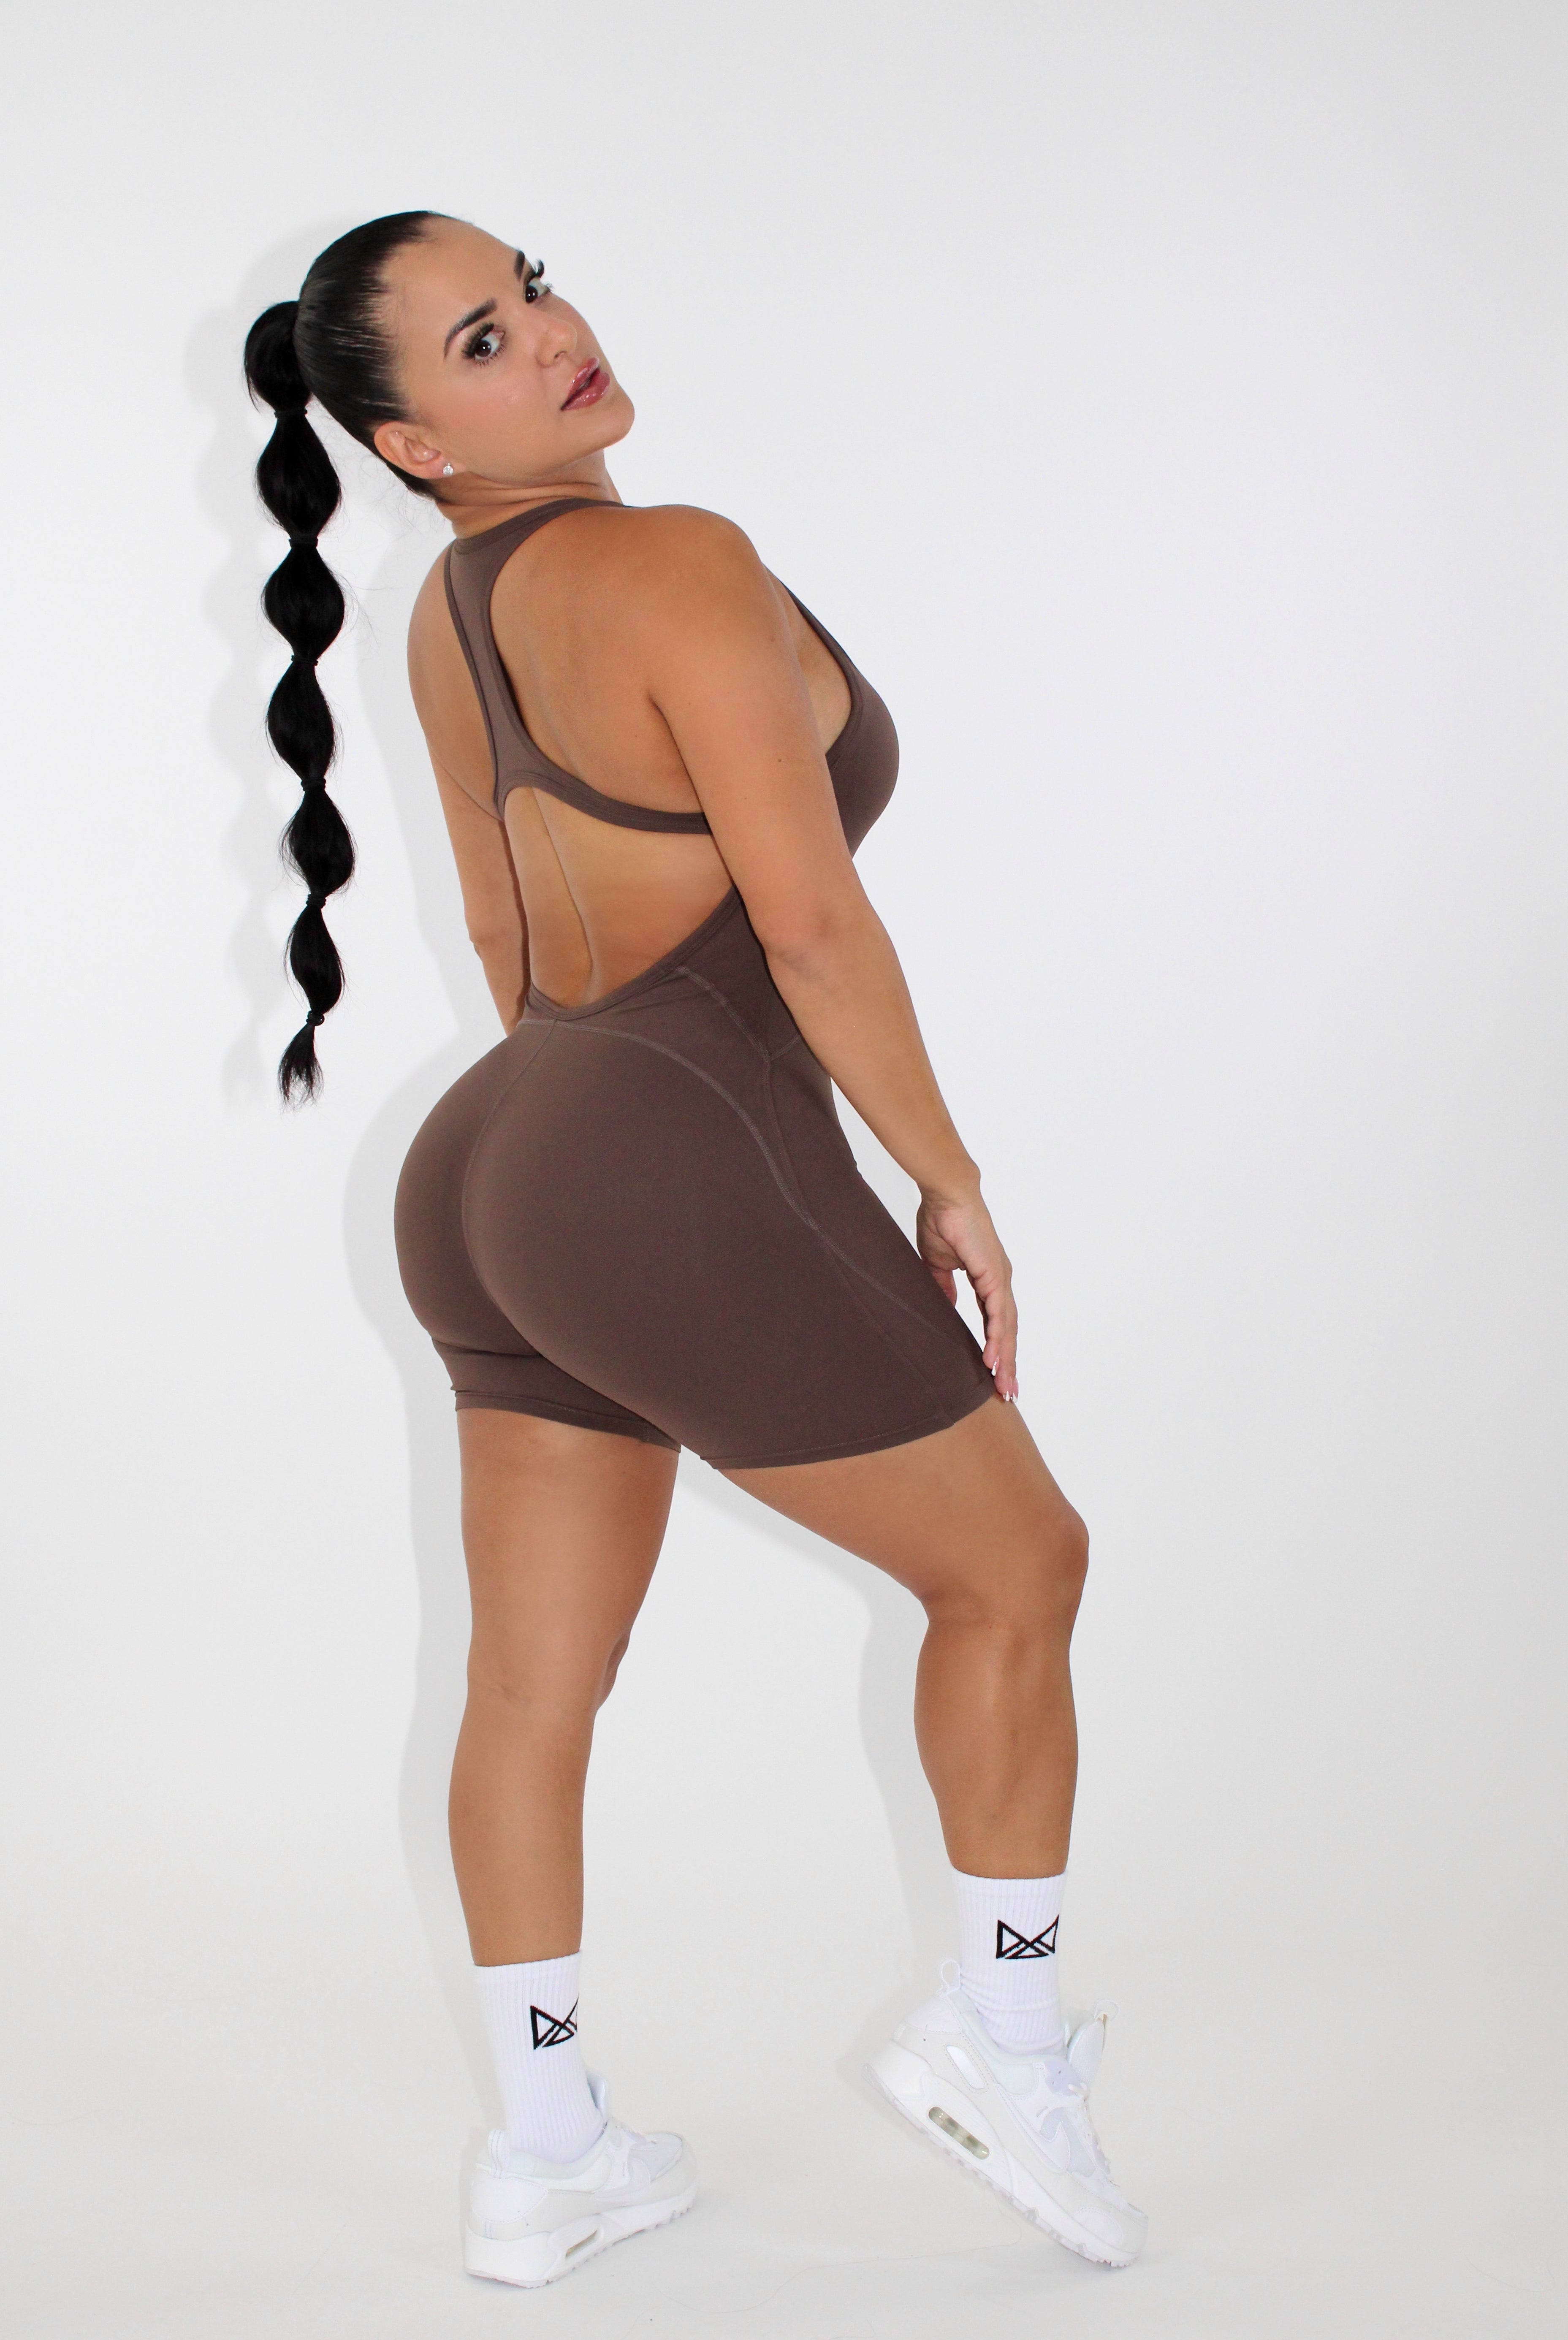 Women wearing a black MILA MVMT Sportswear One-Piece Gym Workout Romper Onesie - facing side looking at the camera